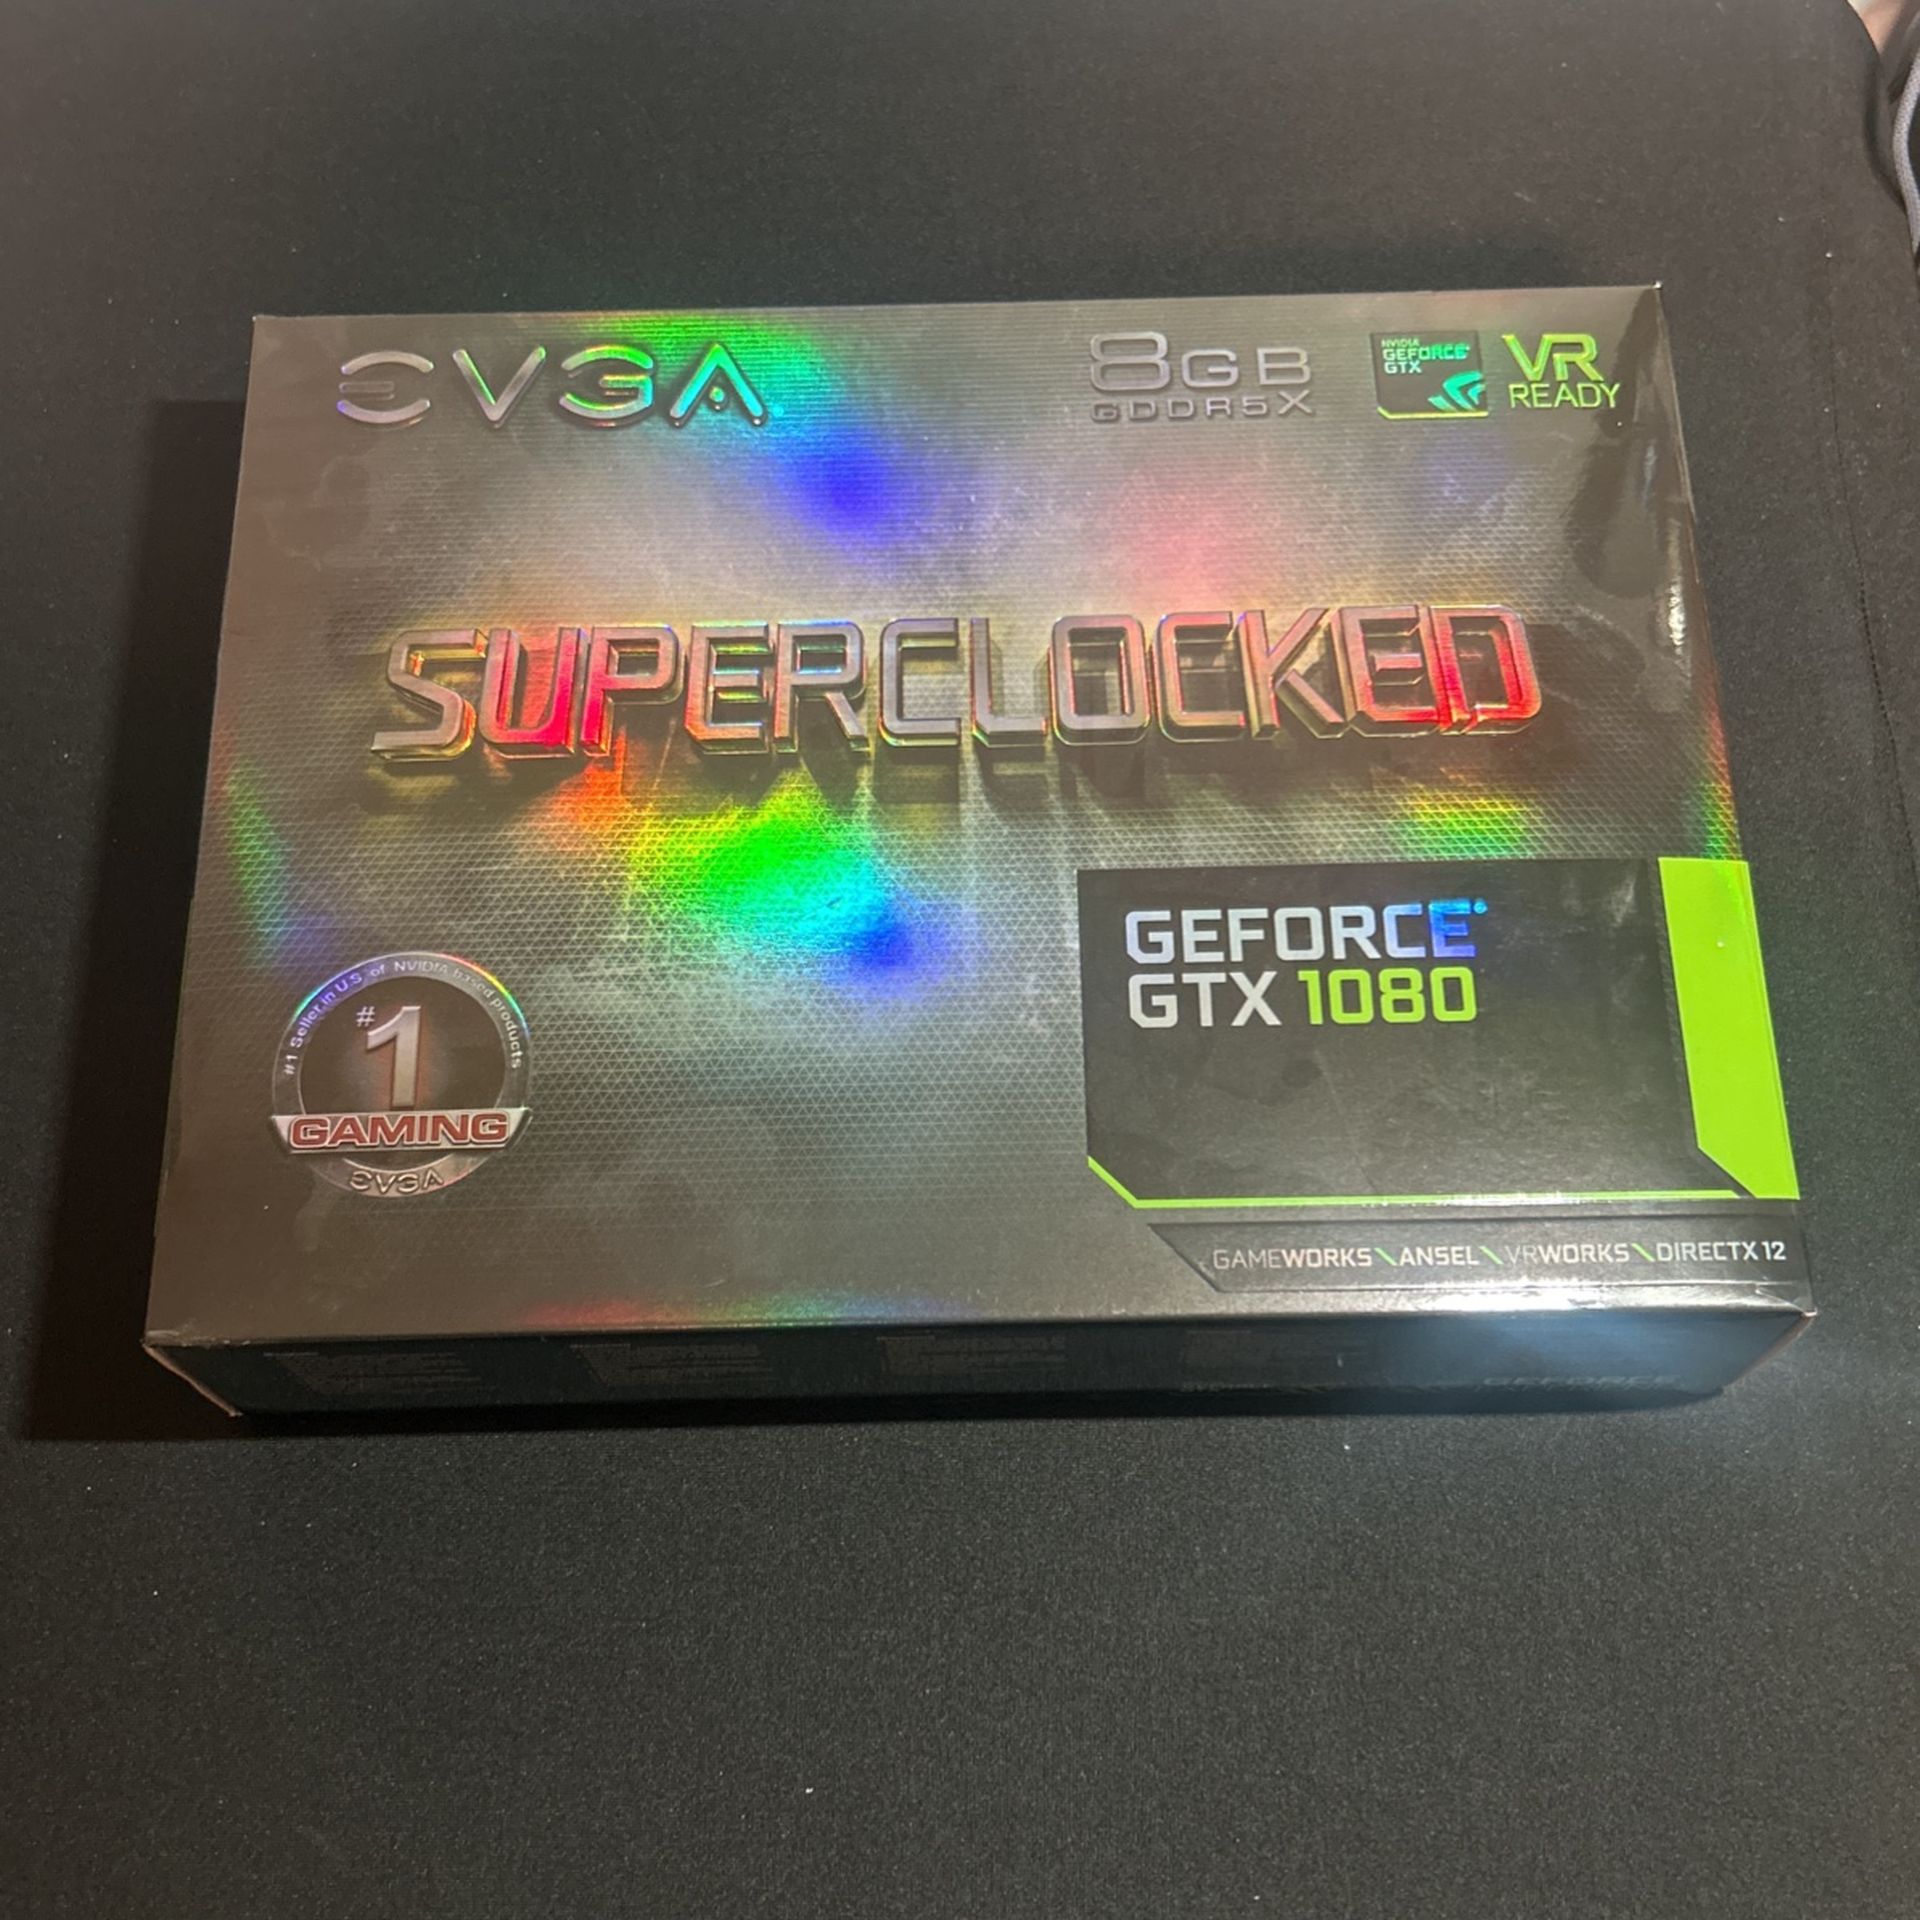 Nvidia GTX 1080 (EVGA Super Clocked Edition)